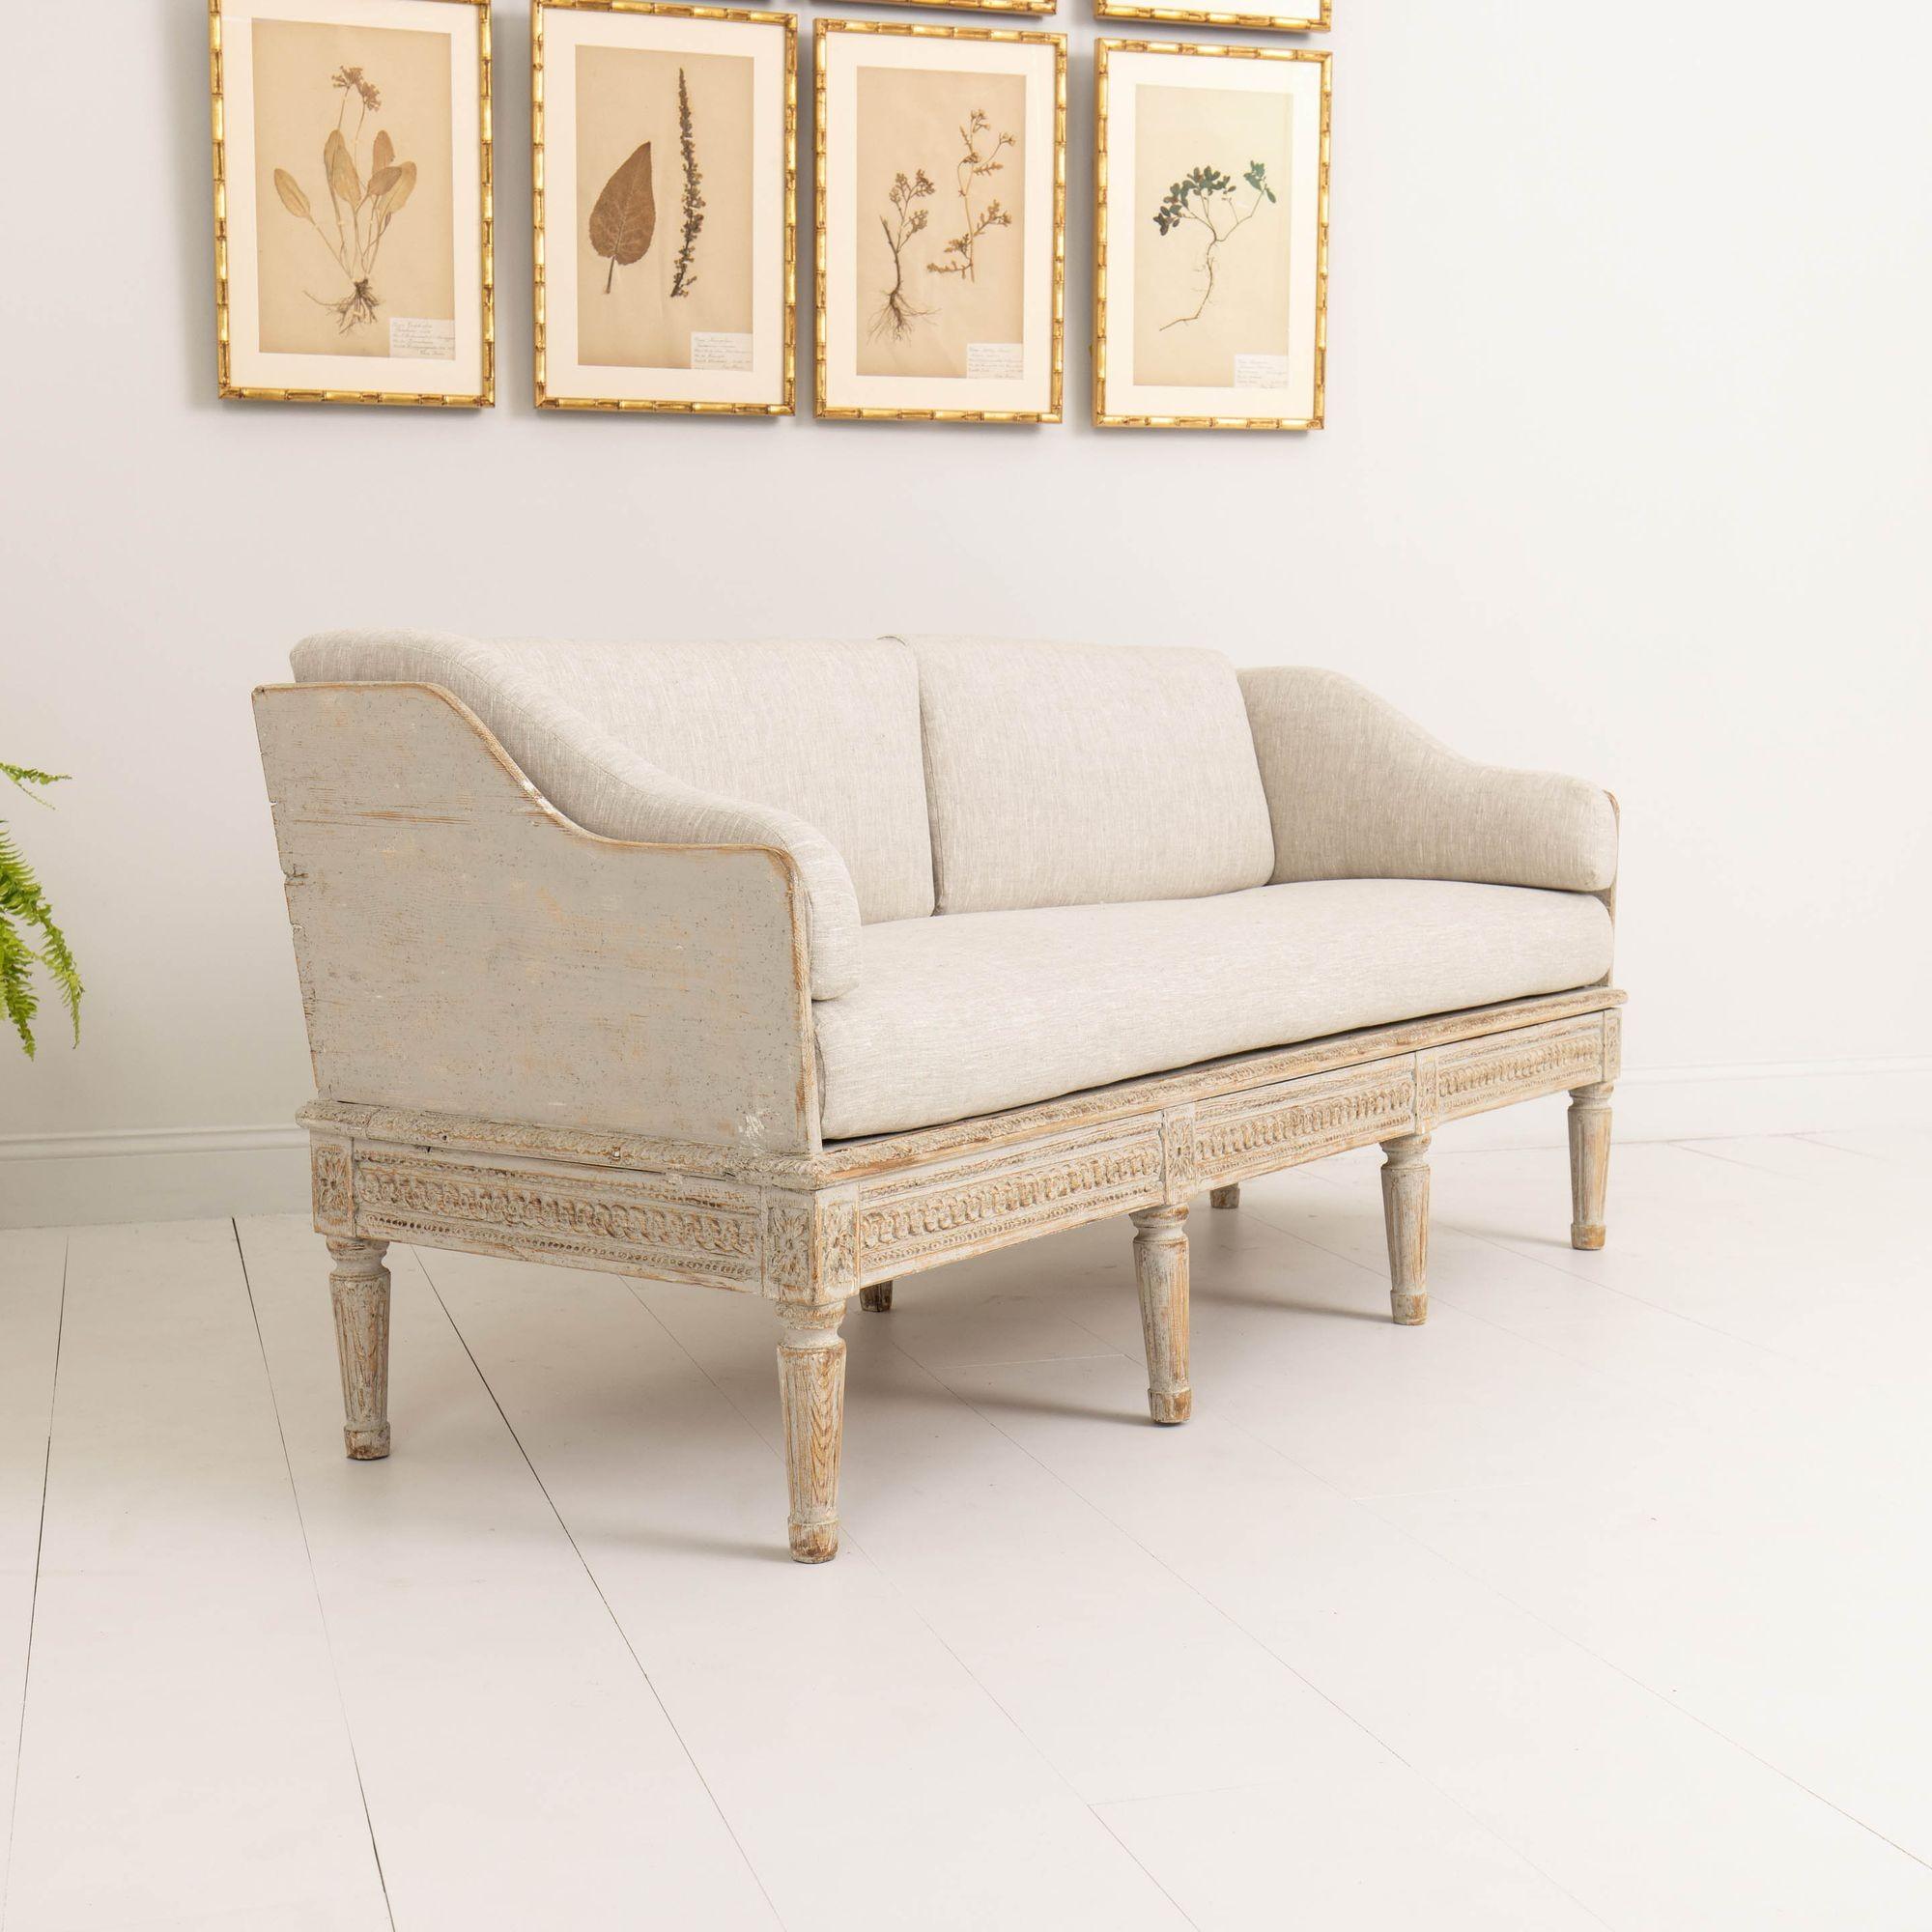 18th c. Swedish Gustavian Period Painted Sofa 'Trägsoffa' 2